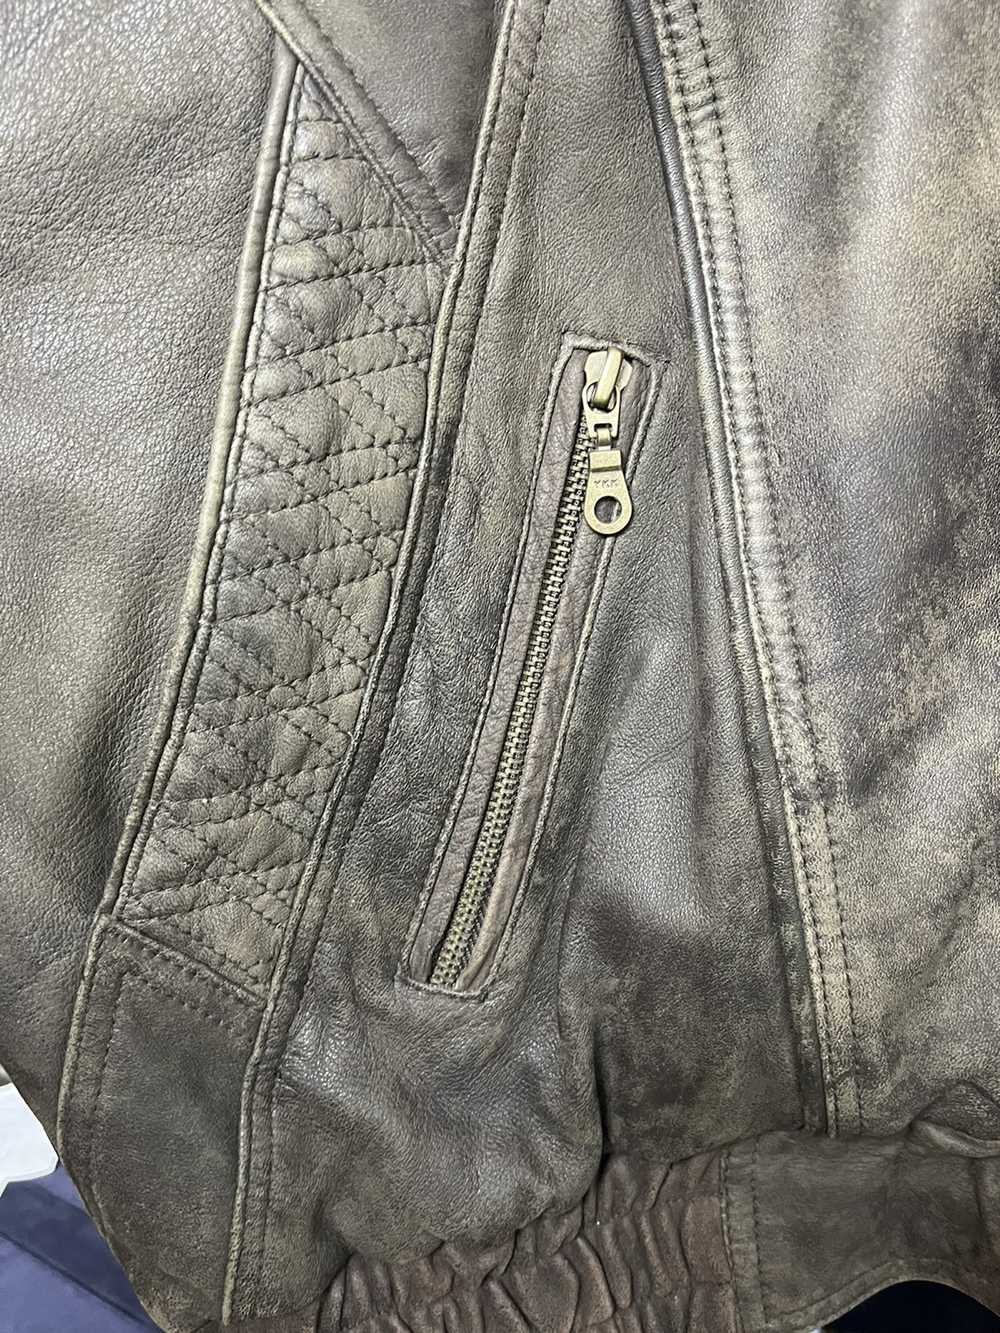 Leather × Leather Jacket × Vintage Vintage 90s Le… - image 7